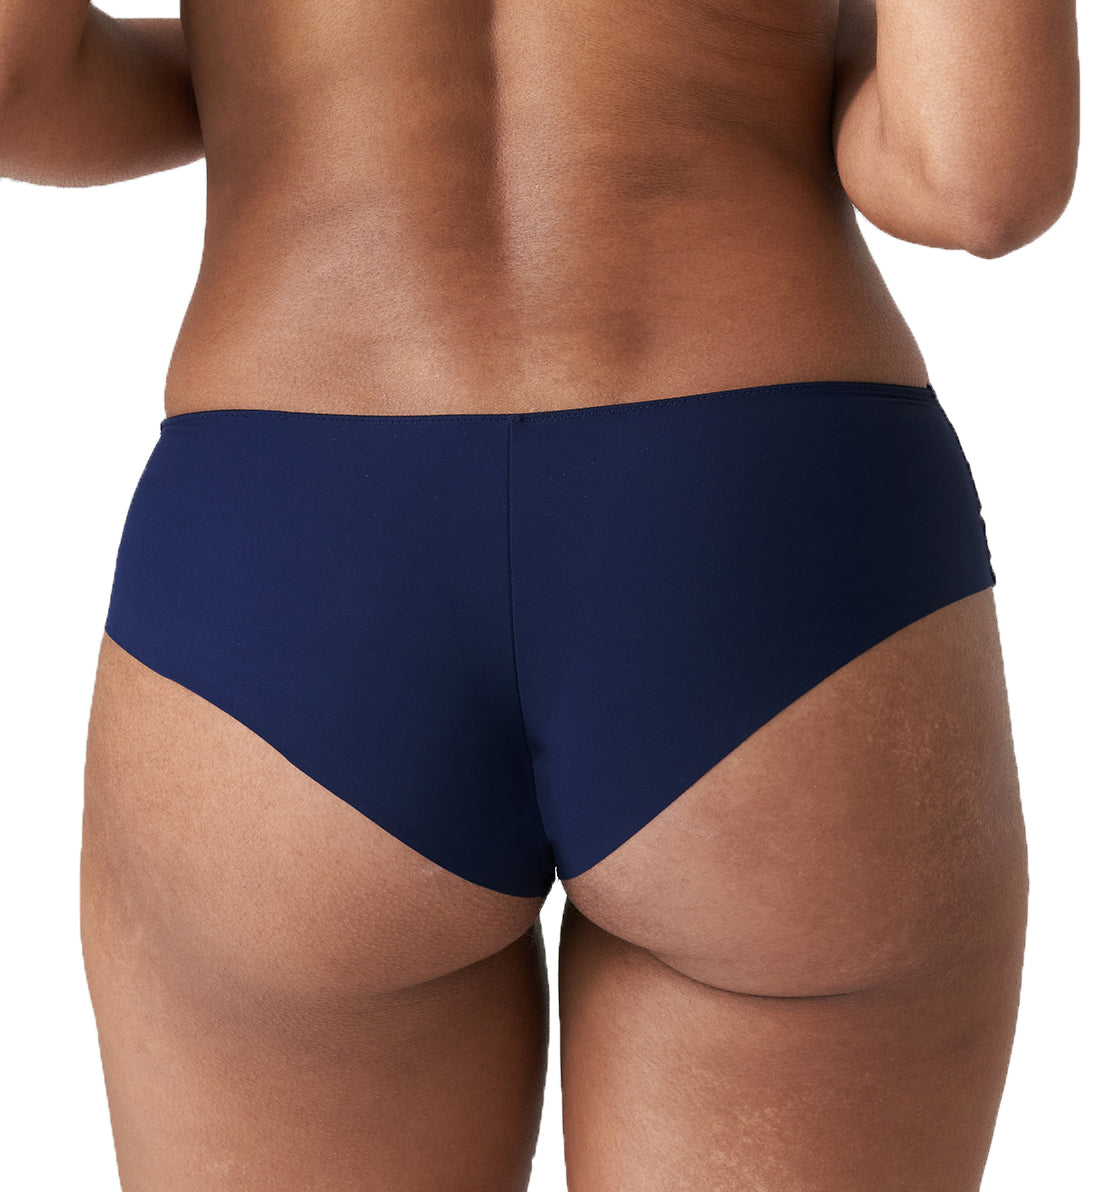 Marie Jo Nathy Matching Hotpants Panty (0502482),XS,Water Blue - Water Blue,XS